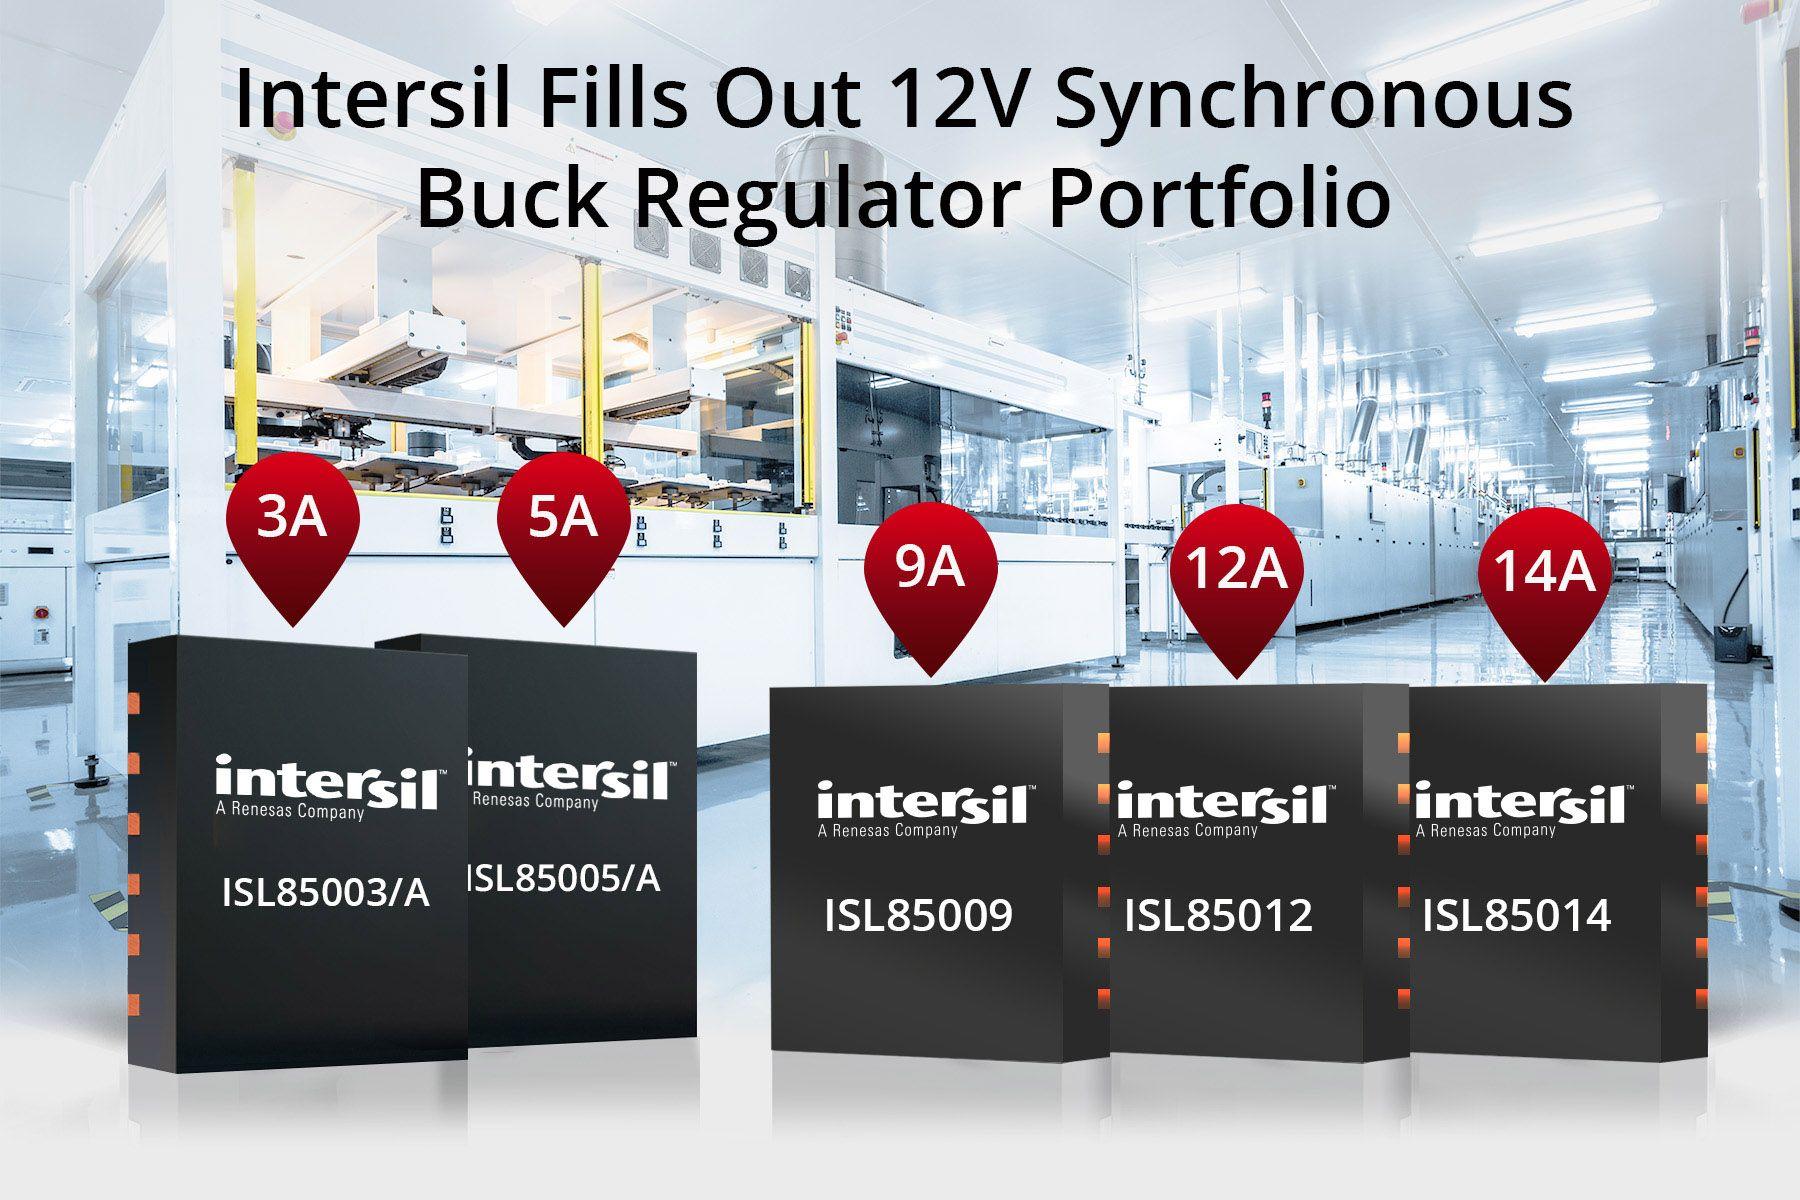 Intersil Logo - Intersil Fills Out 12V Synchronous Buck Regulator Portfolio ...